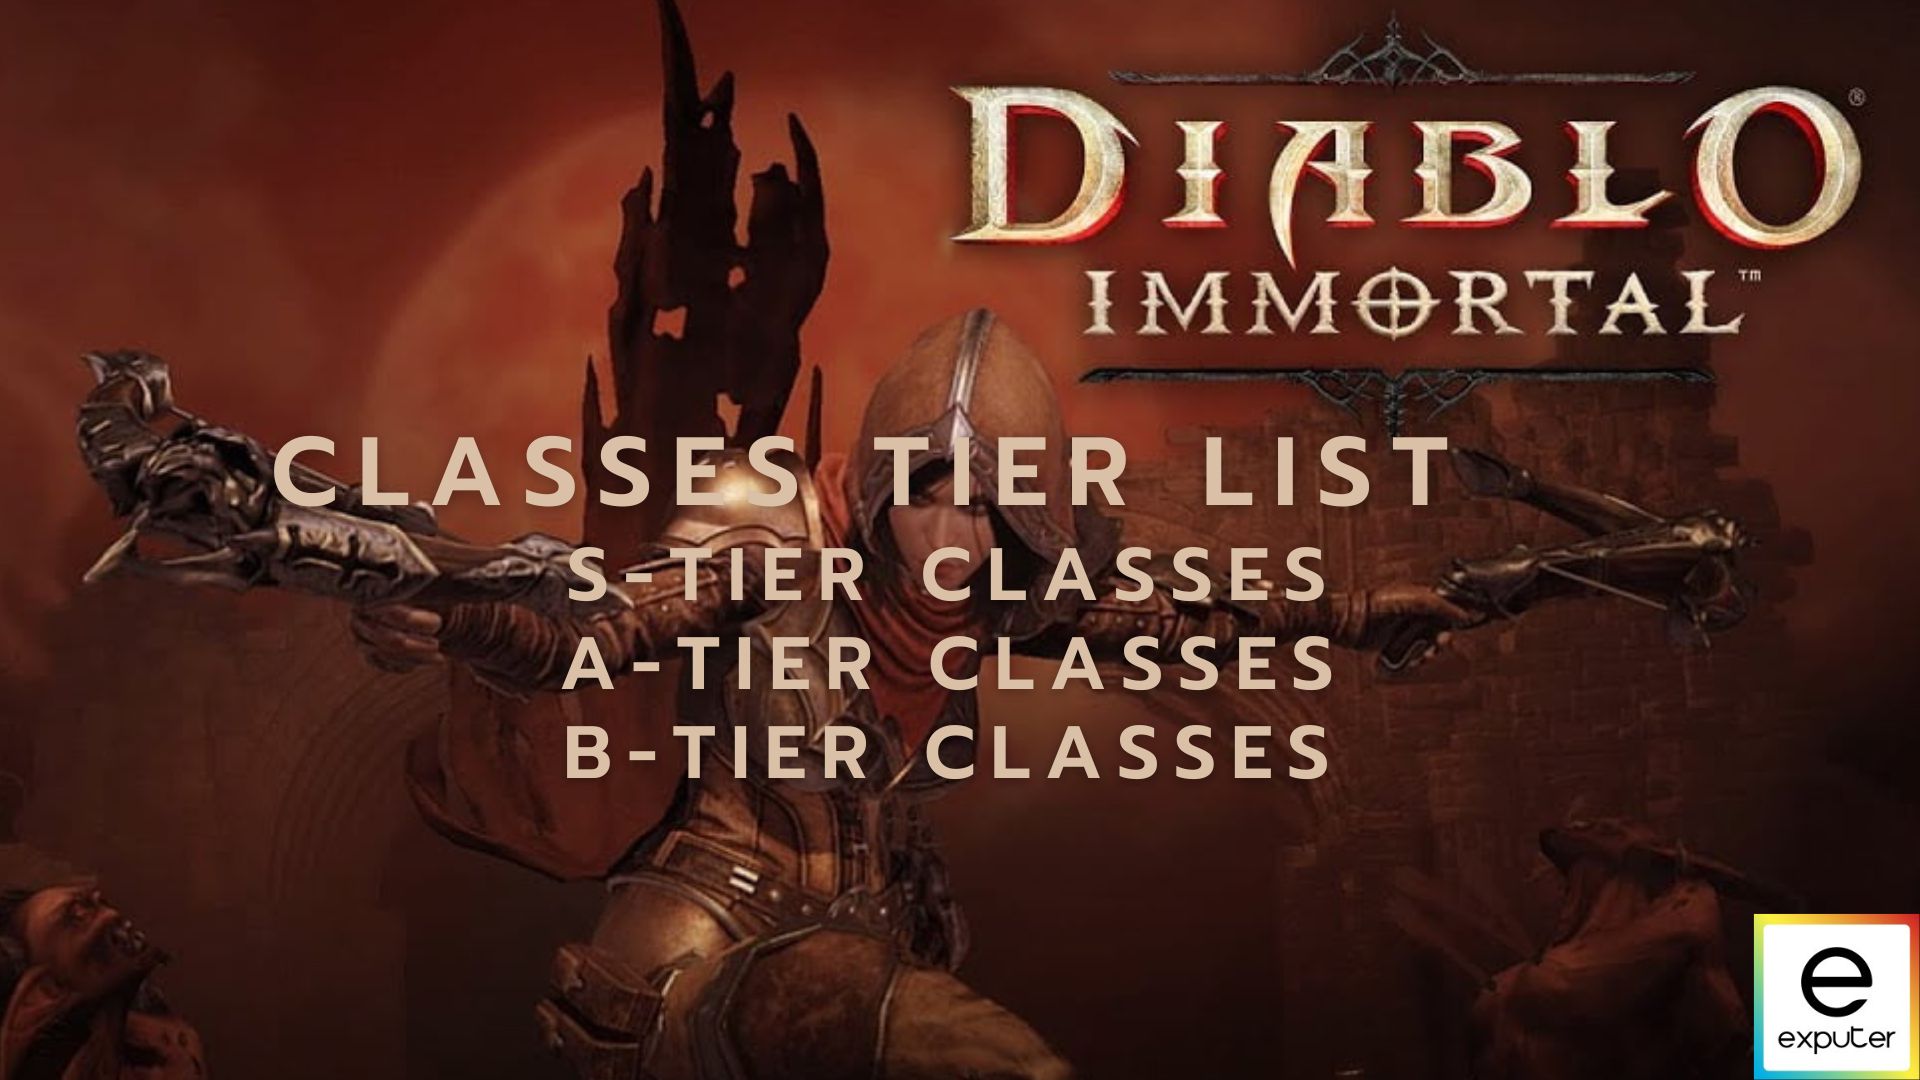 Diablo Immortal class tier list: Which is the best class?